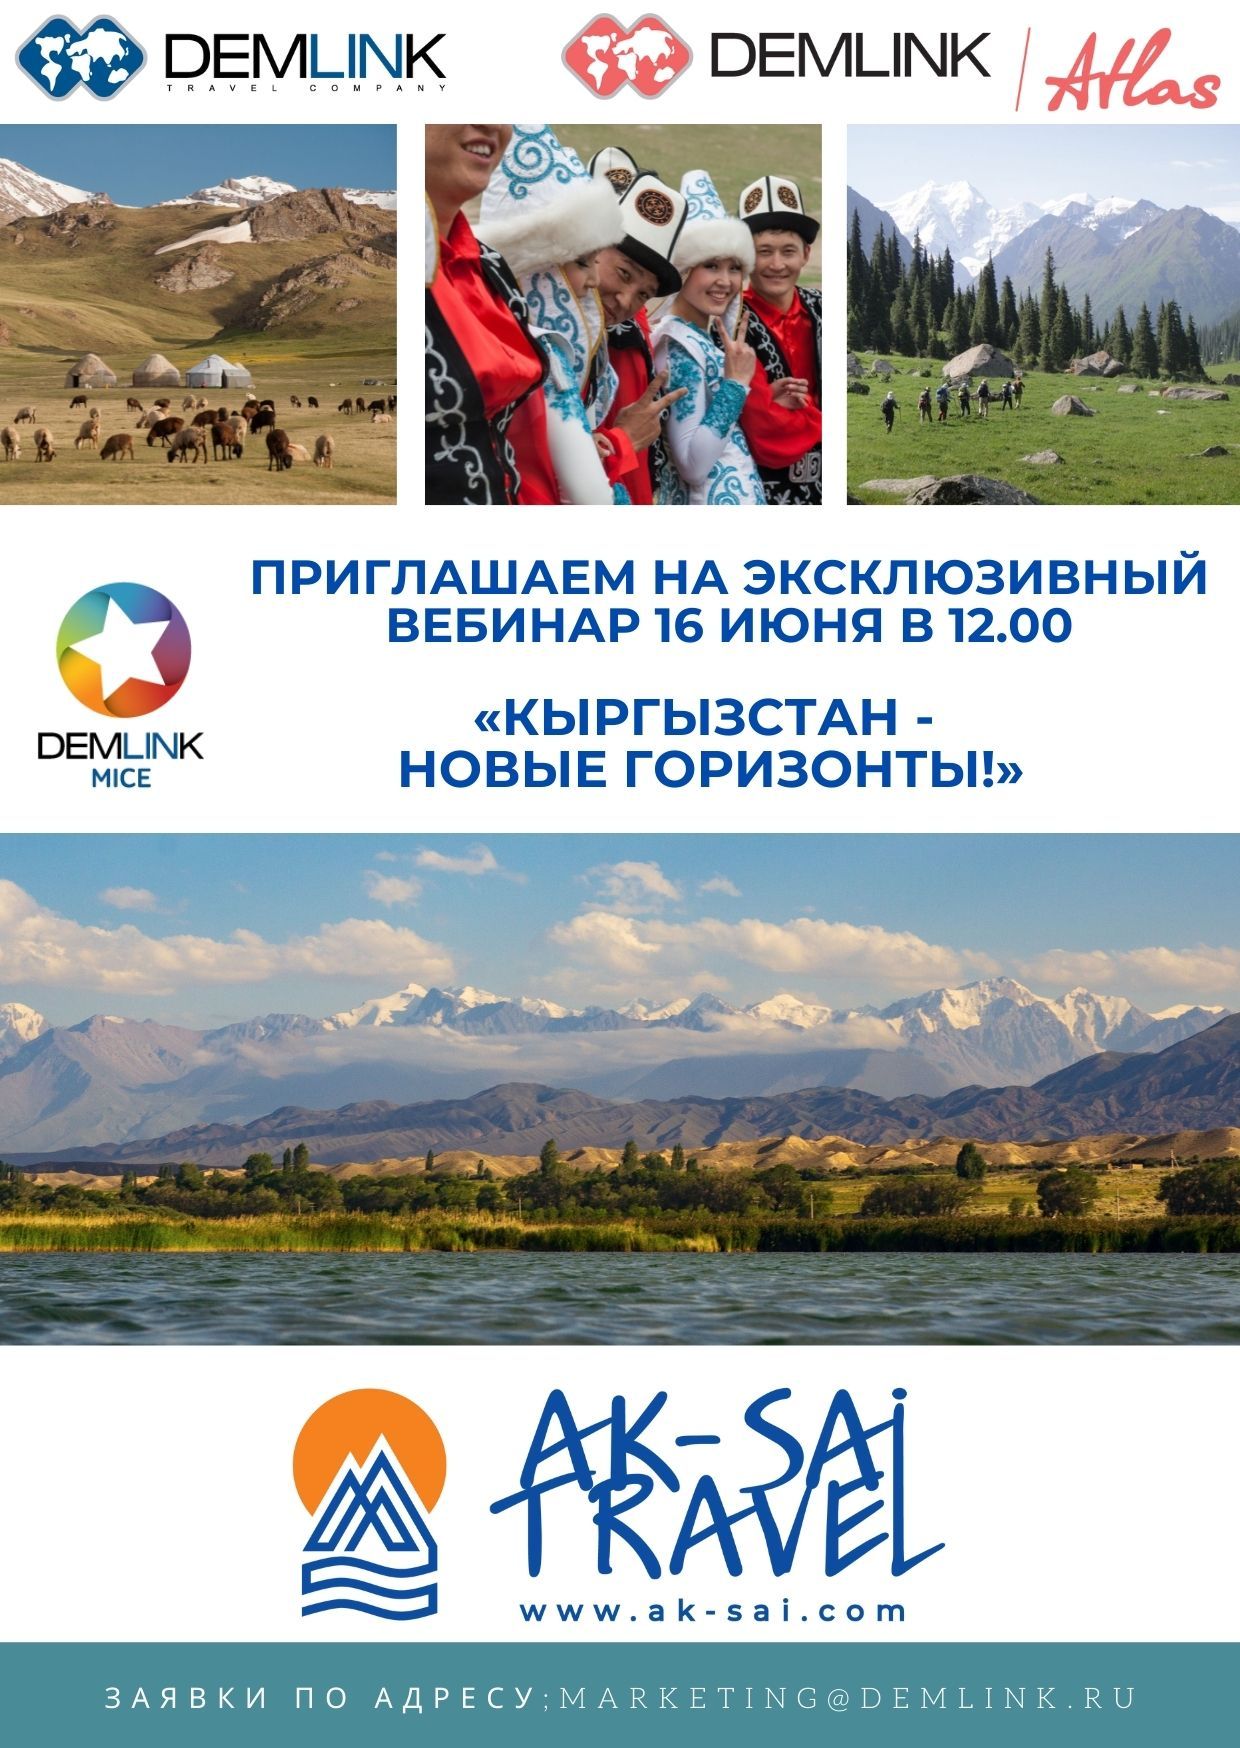 Demlink MICE2. Приглашение на вебинар_ Кыргызстан - новые горизонты_16.06.2022.jpg